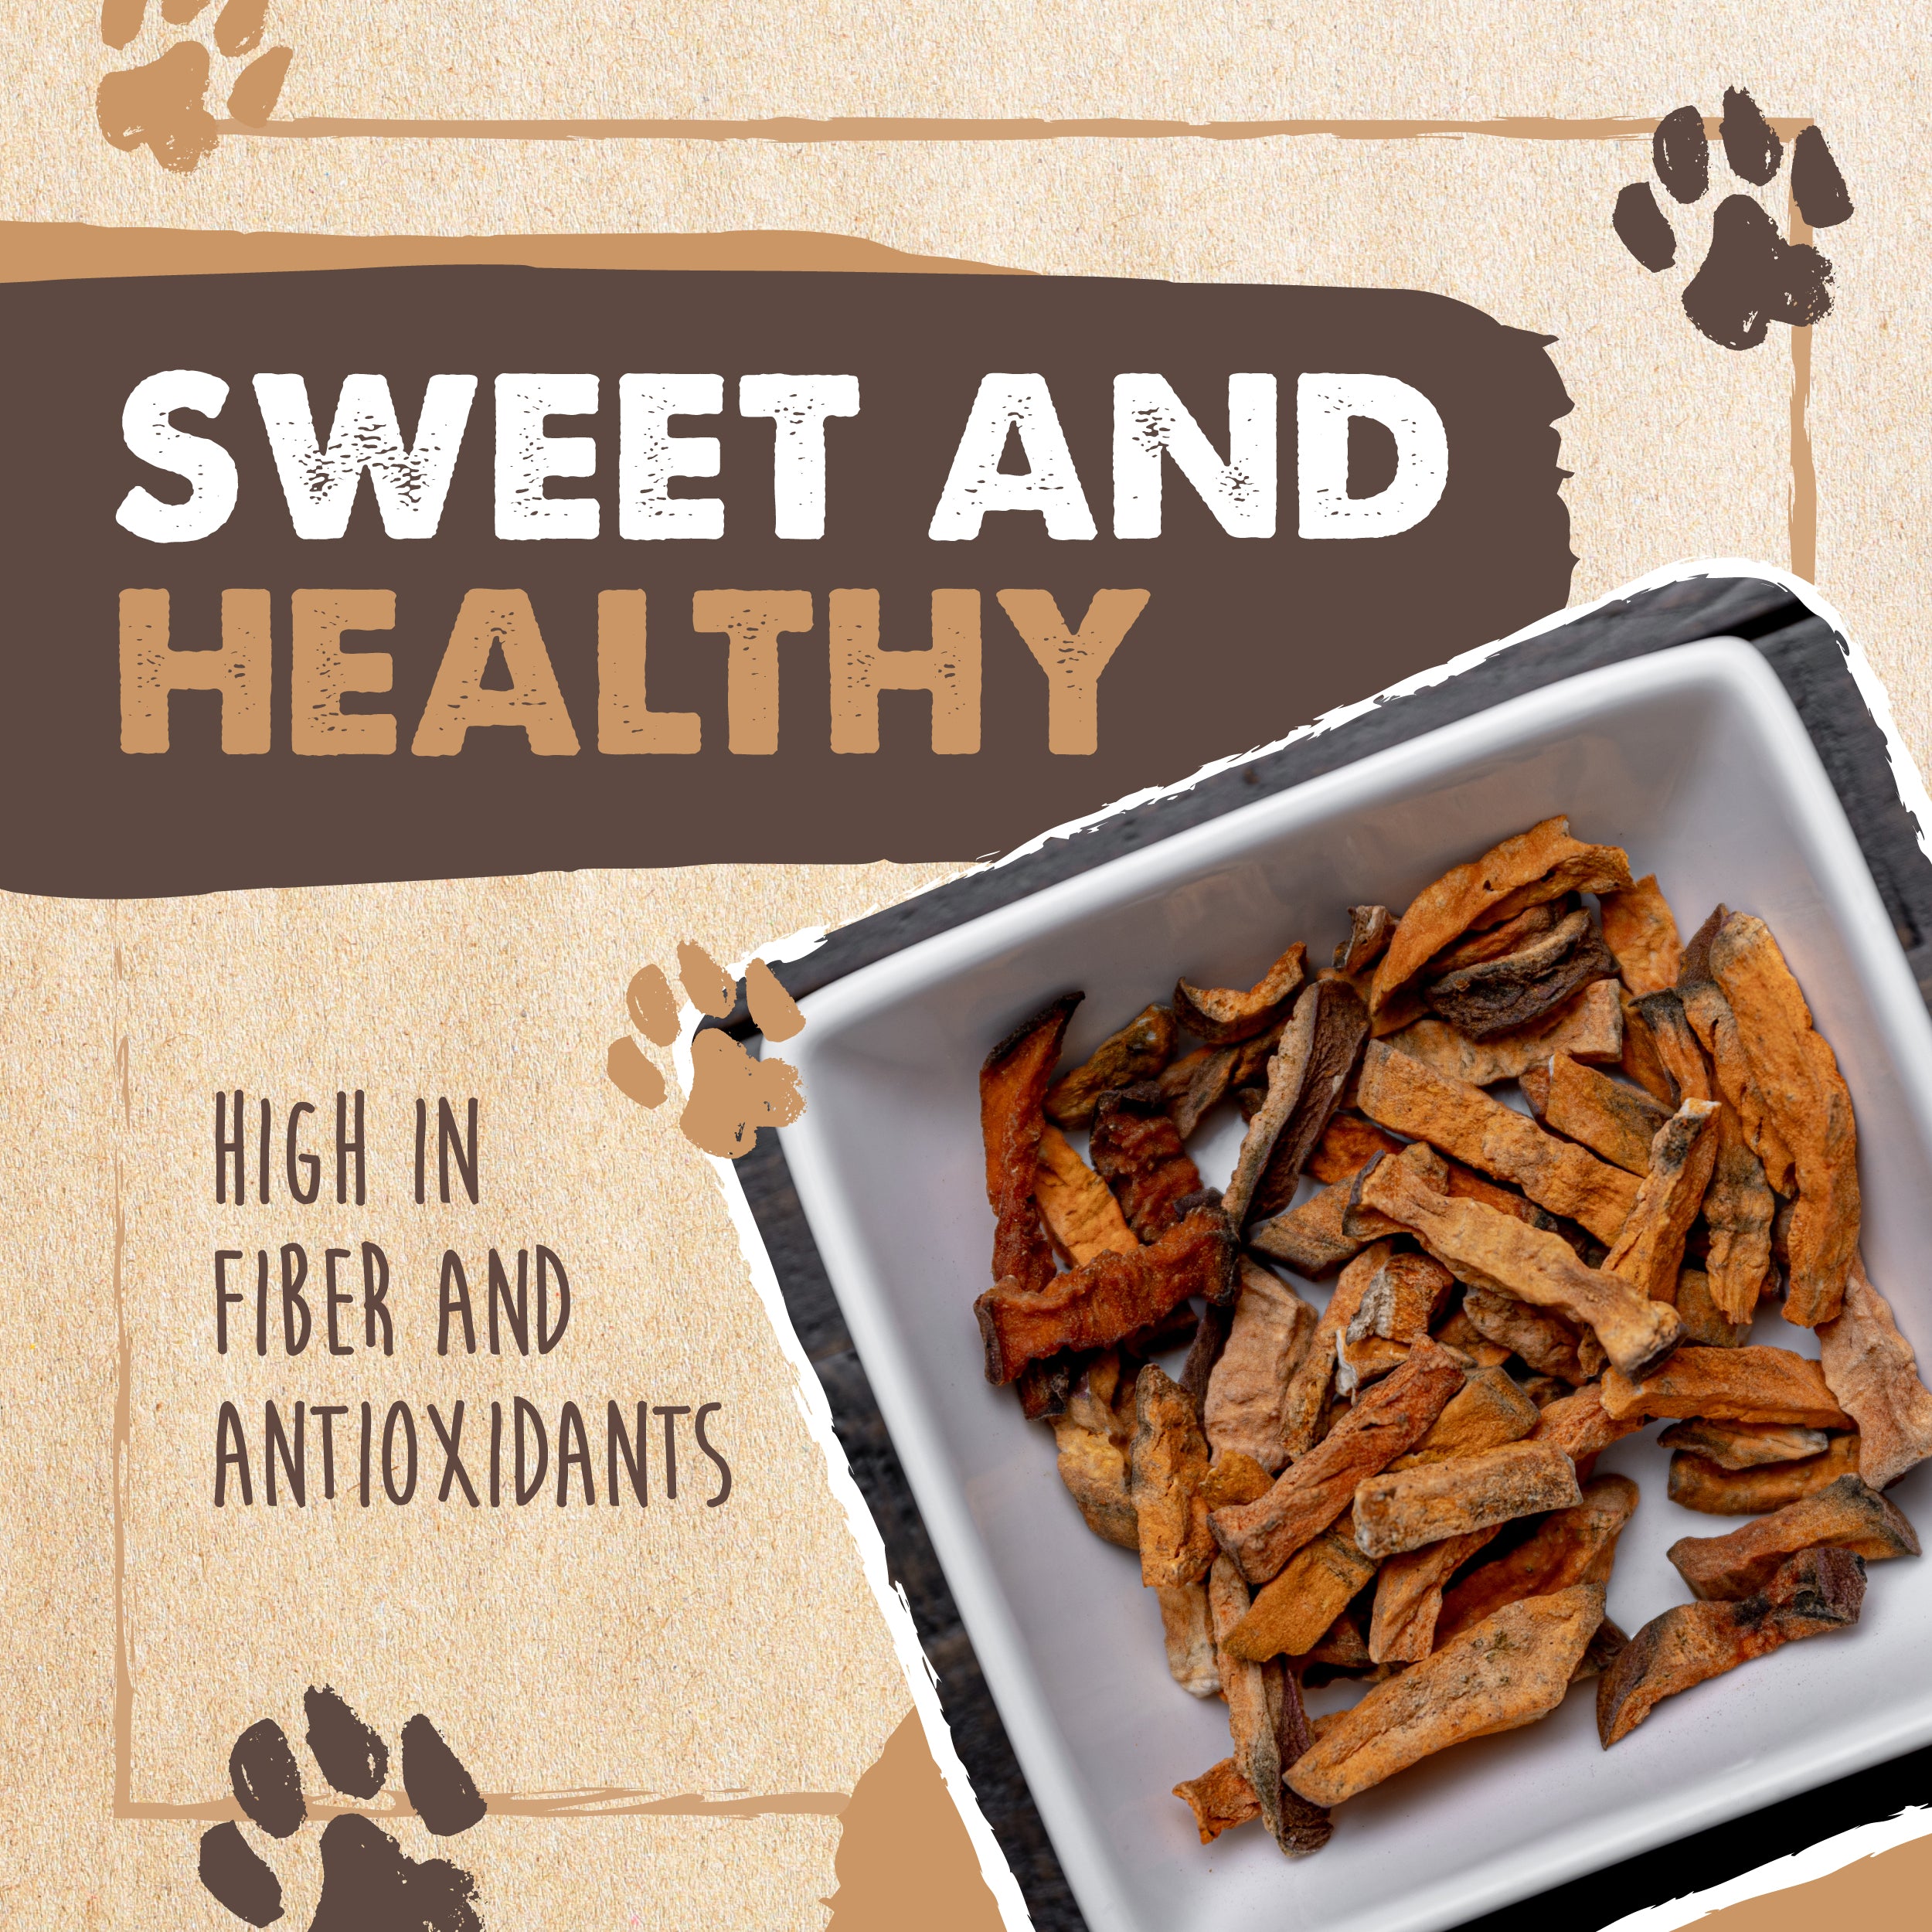 Grain-Free Sweet Potato Dog Treats for Training (Fries and Slices Combo) - 14 oz